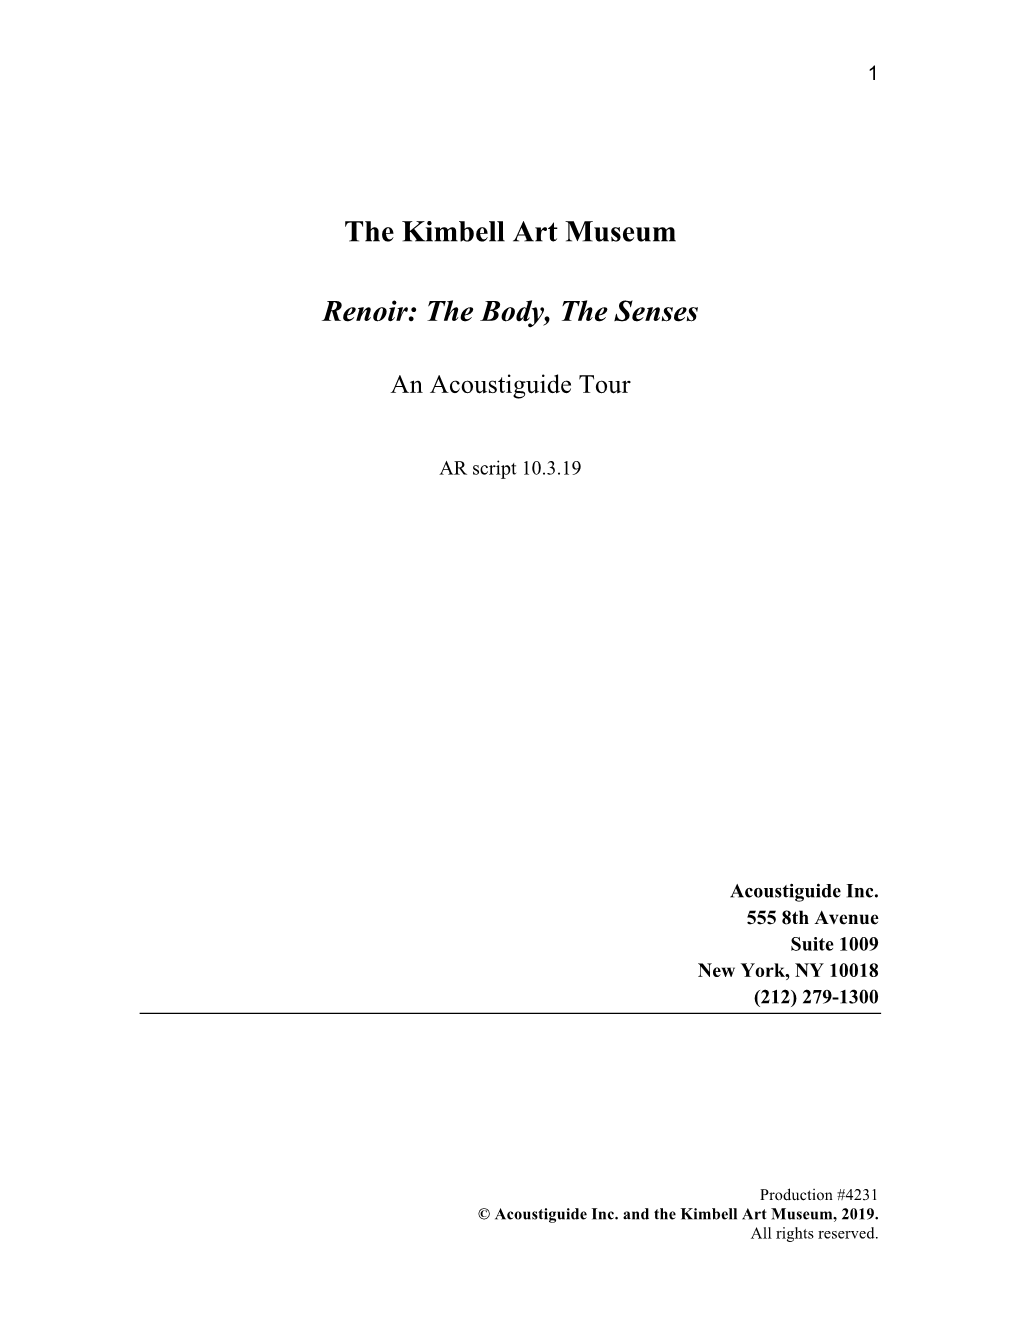 The Kimbell Art Museum Renoir: the Body, the Senses